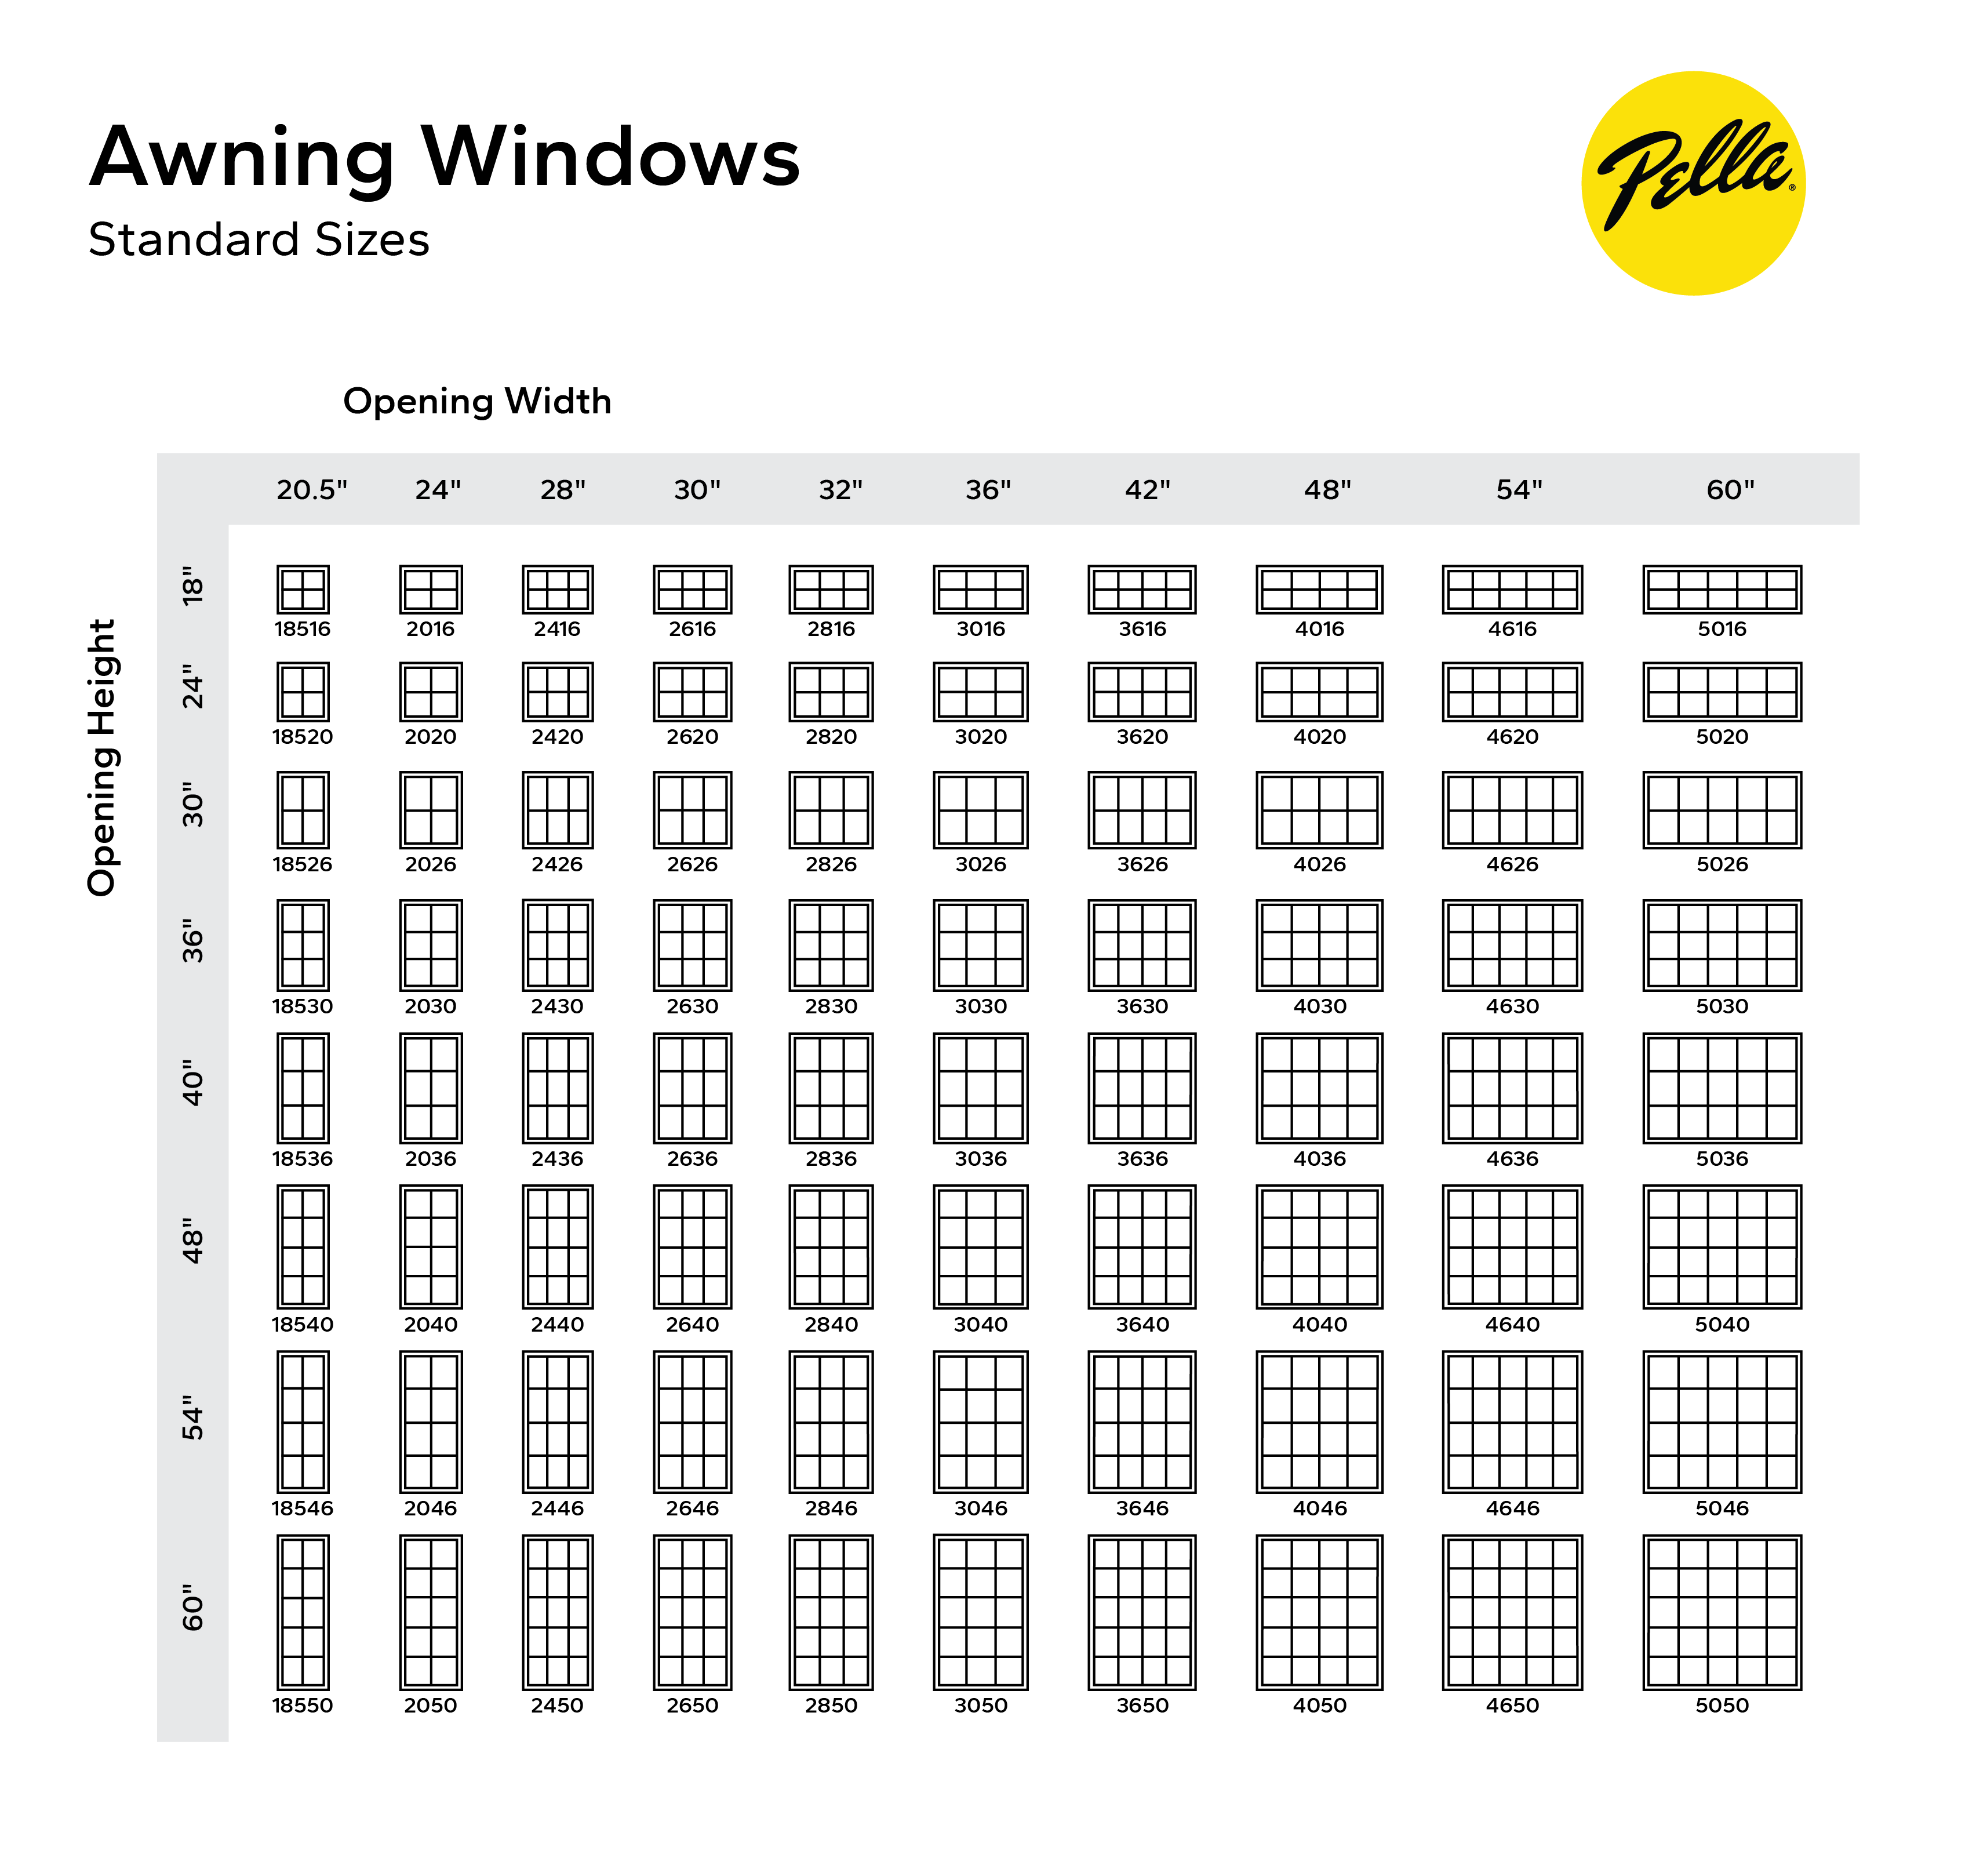 Making Sense of Standard Window Sizes